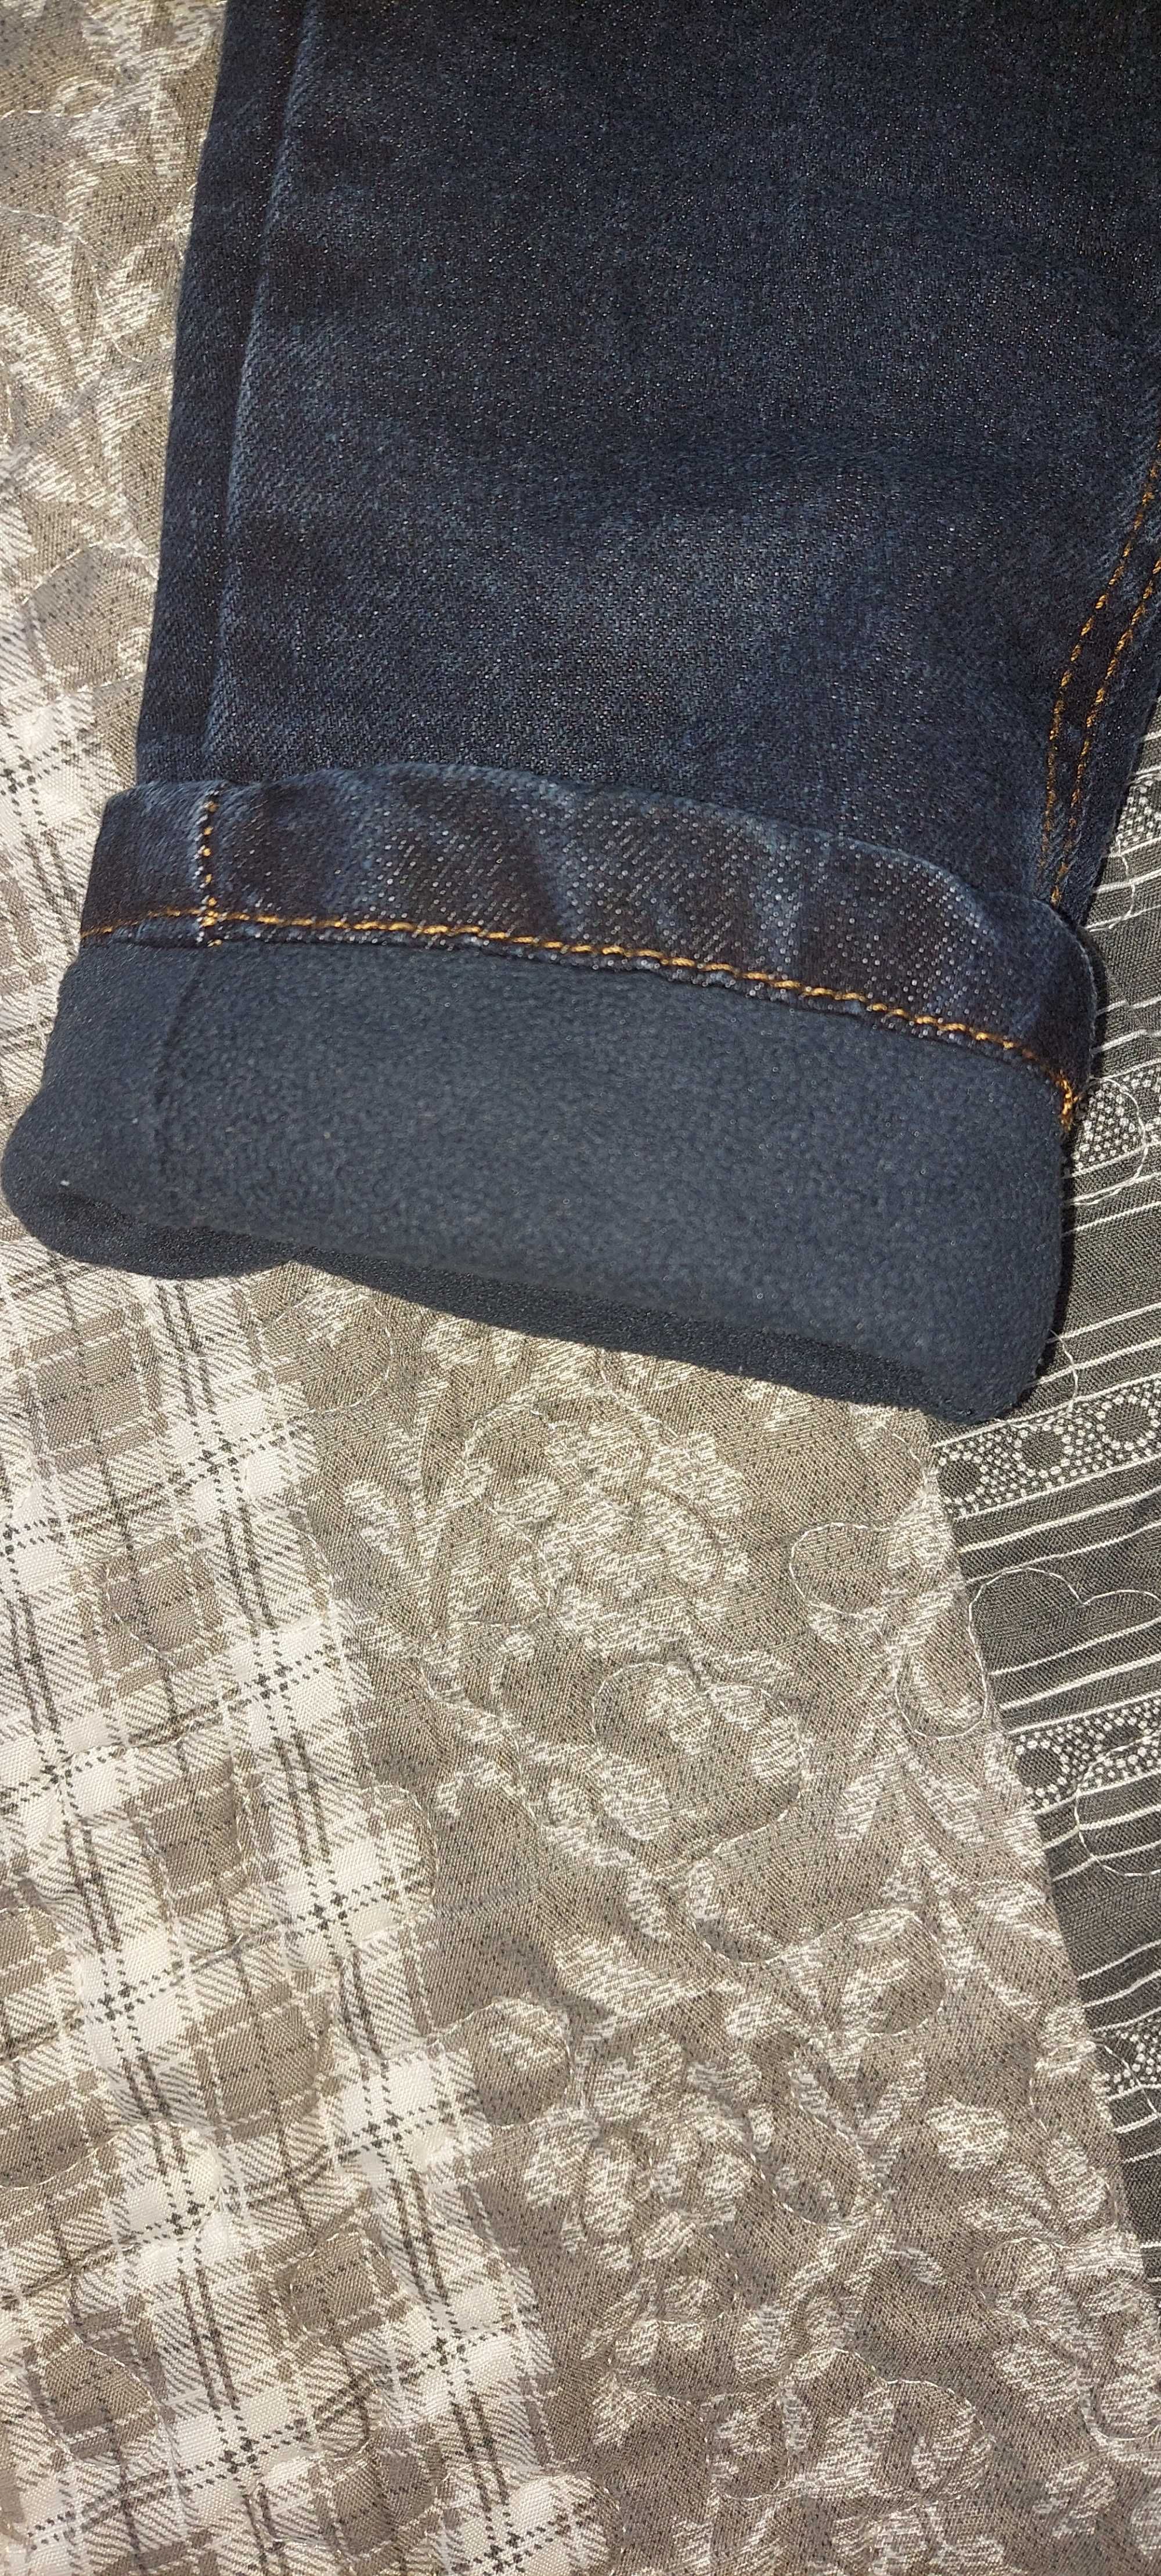 Spodnie jeansy ocieplane